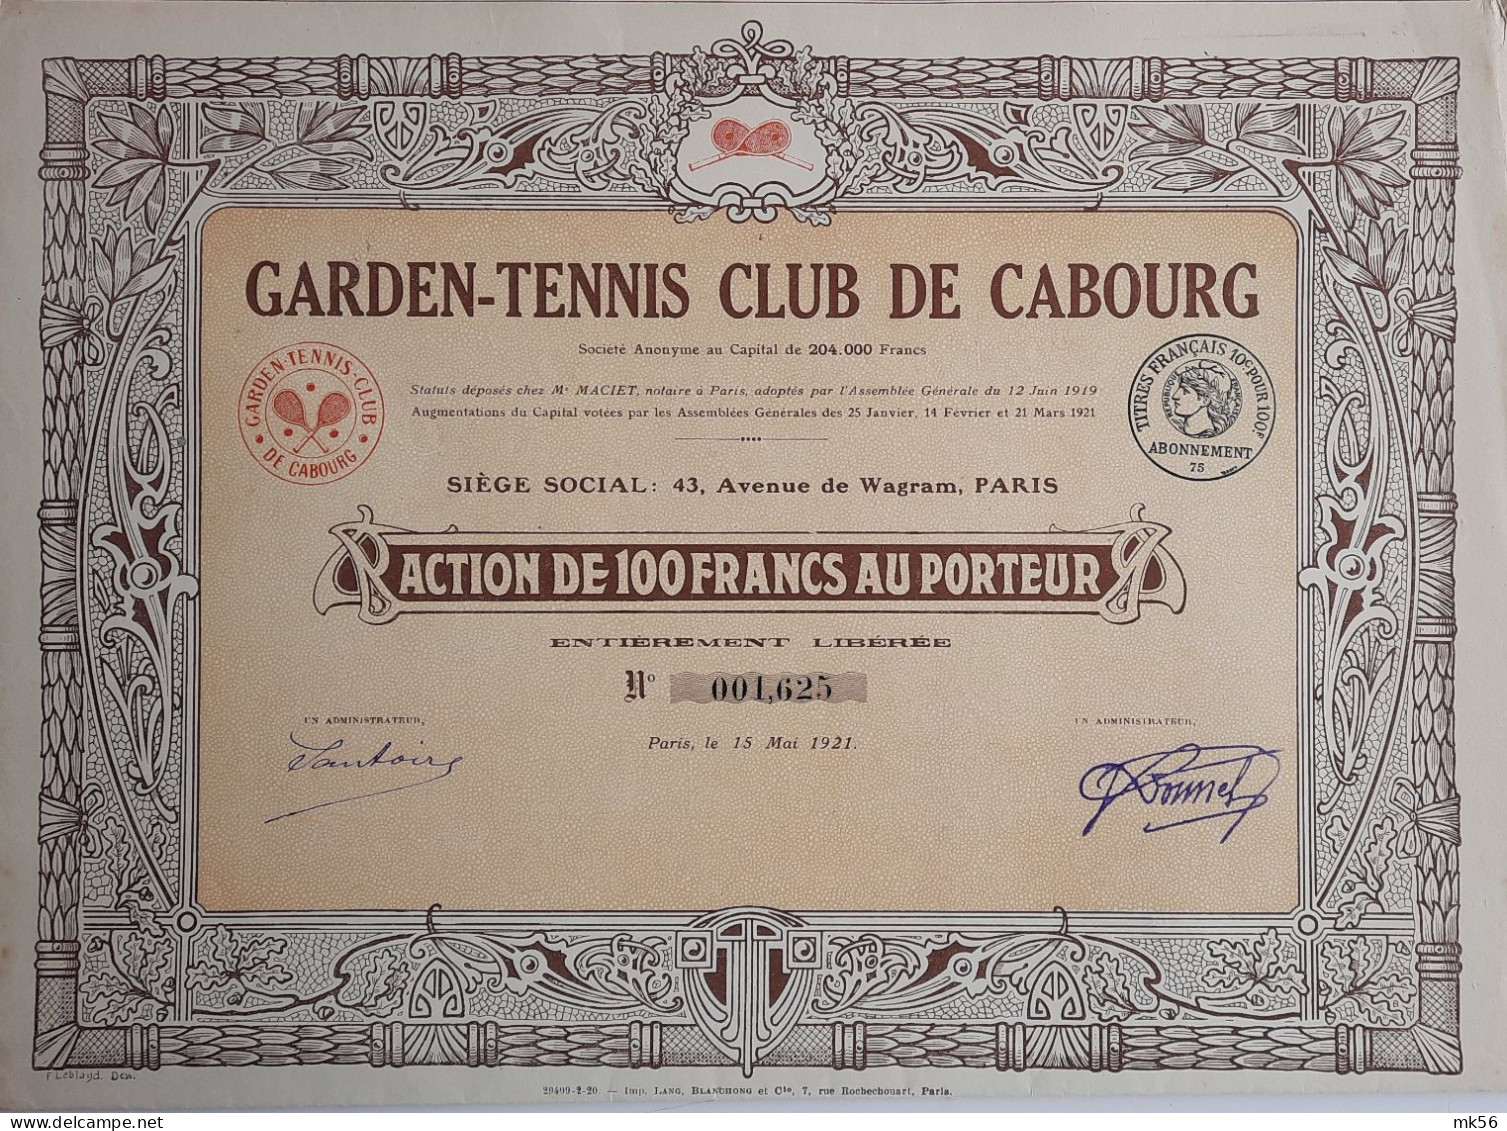 Garden-Tennis Club De Cabourg - Paris - 1921 - Sports